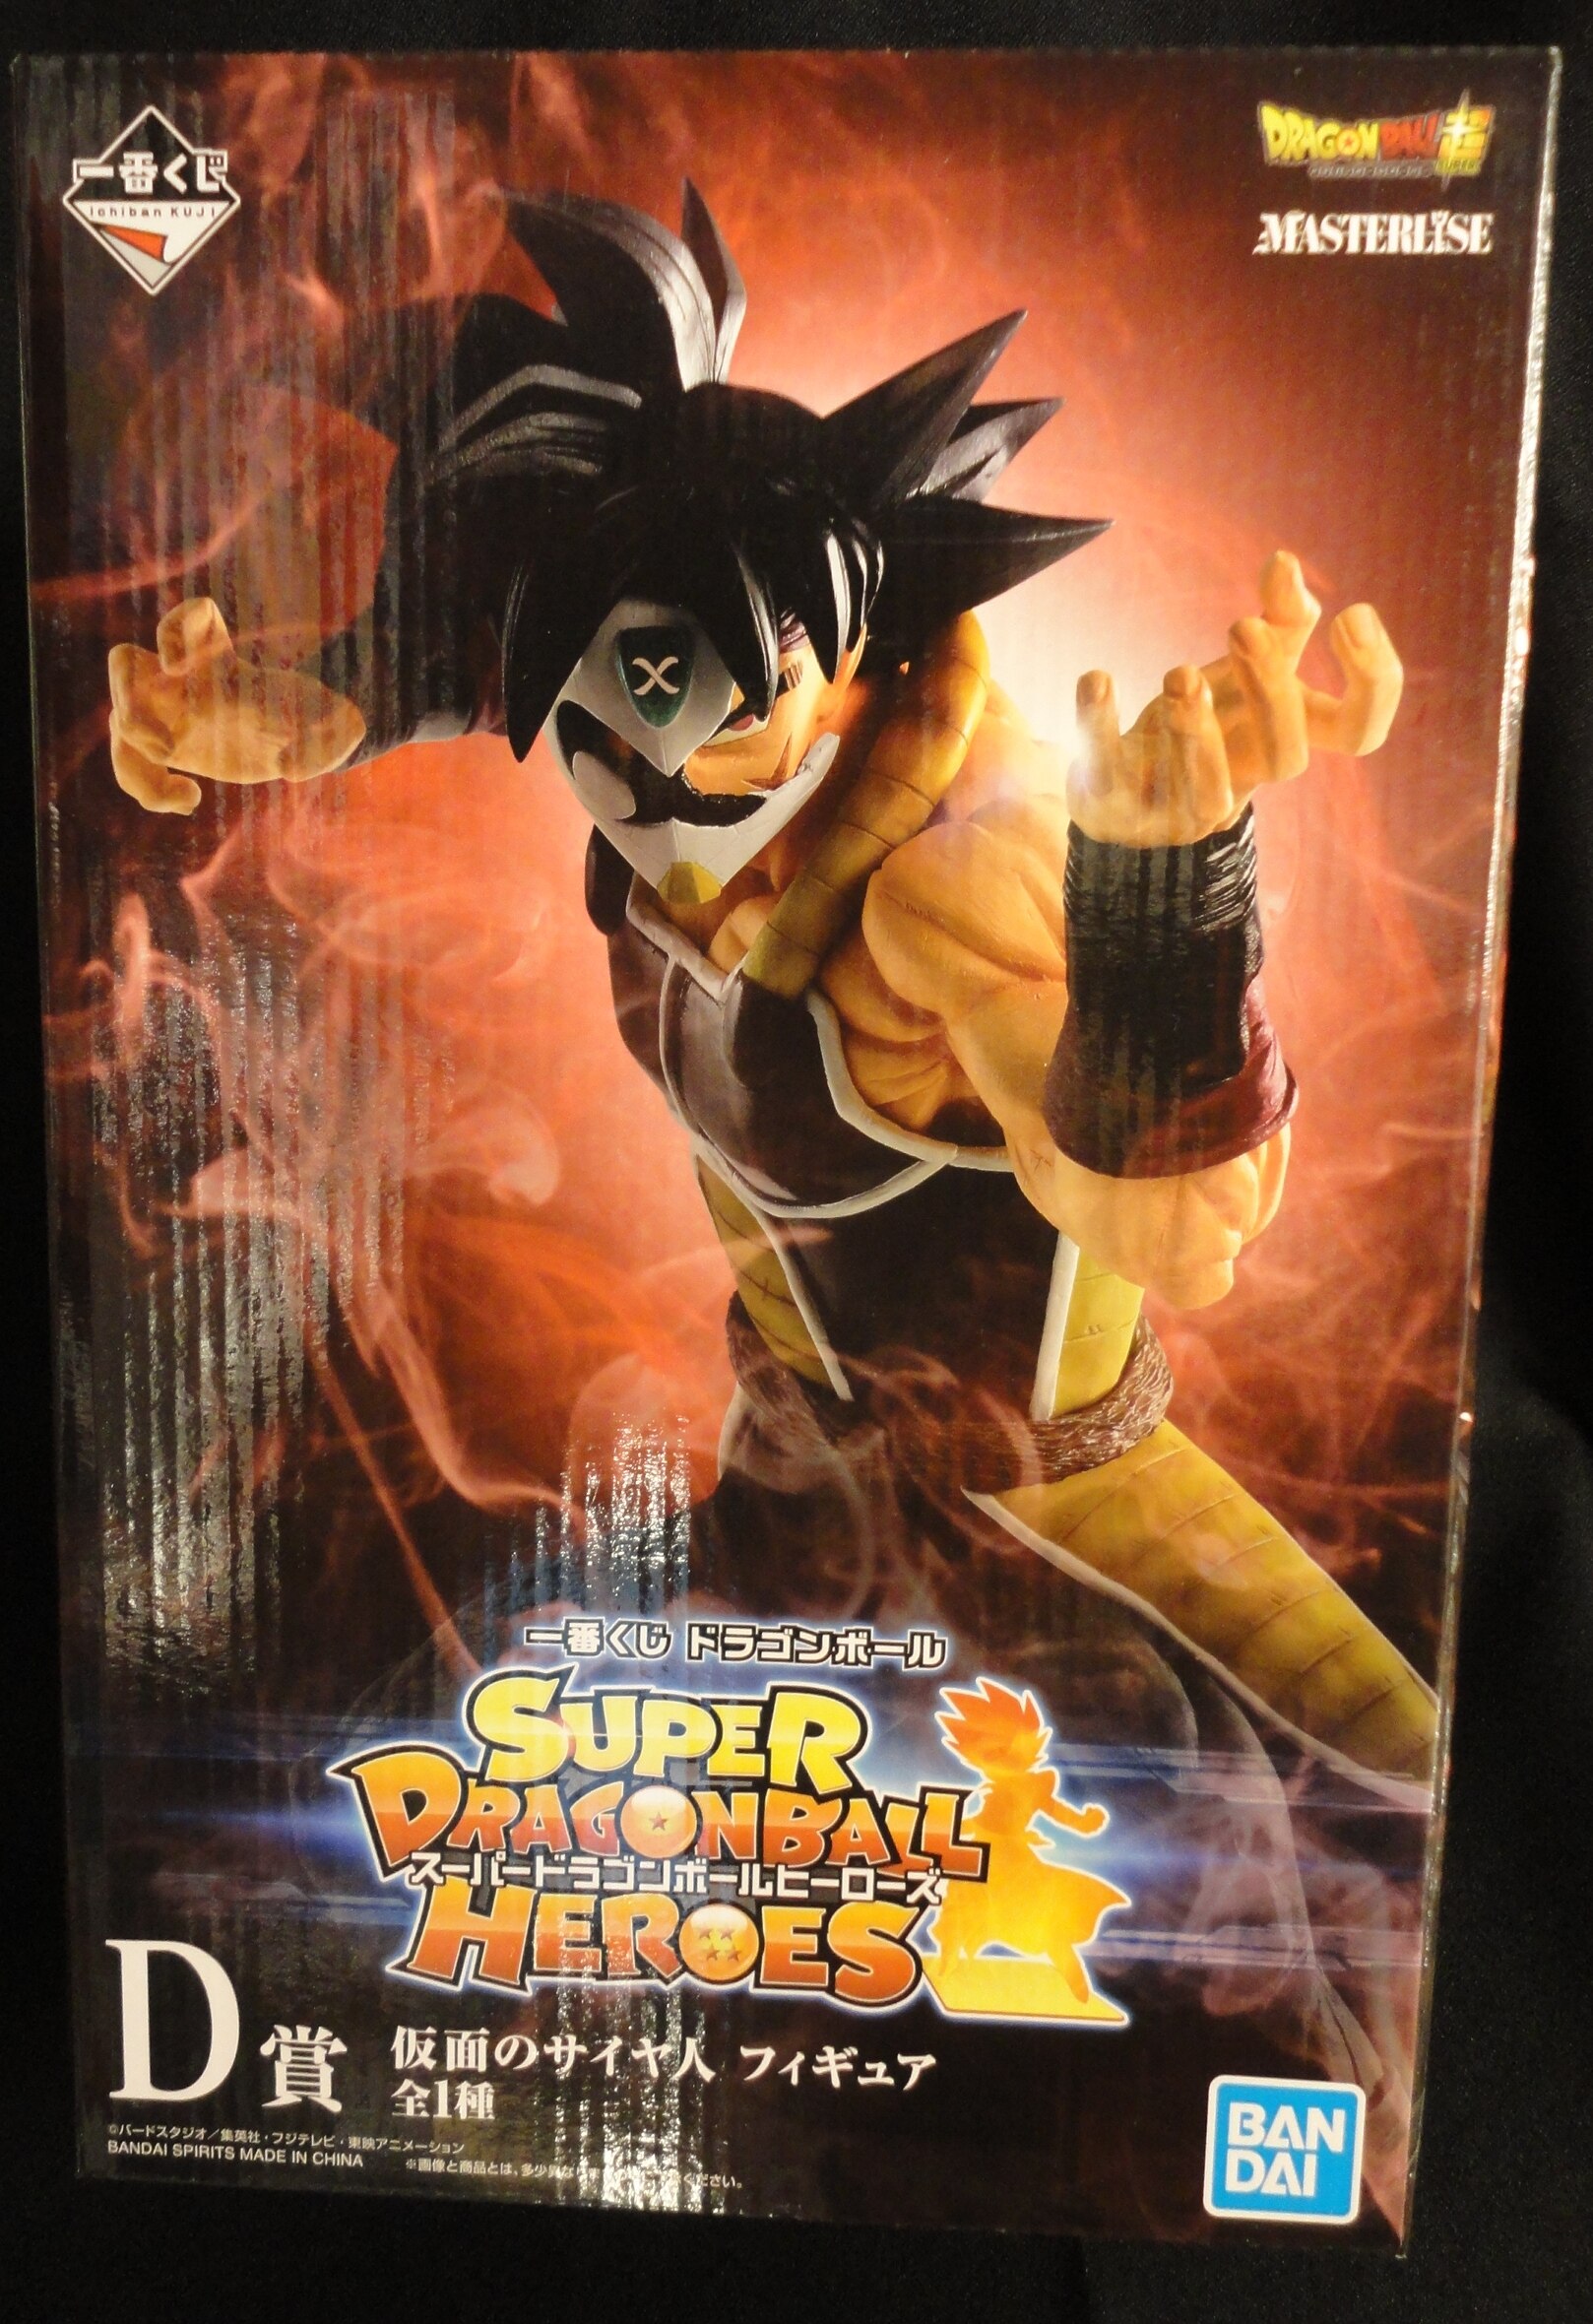 Bandai Spirits 一番くじ ドラゴンボール Super Dragonball Heroes D賞仮面のサイヤ人 Masterlise フィギュア まんだらけ Mandarake